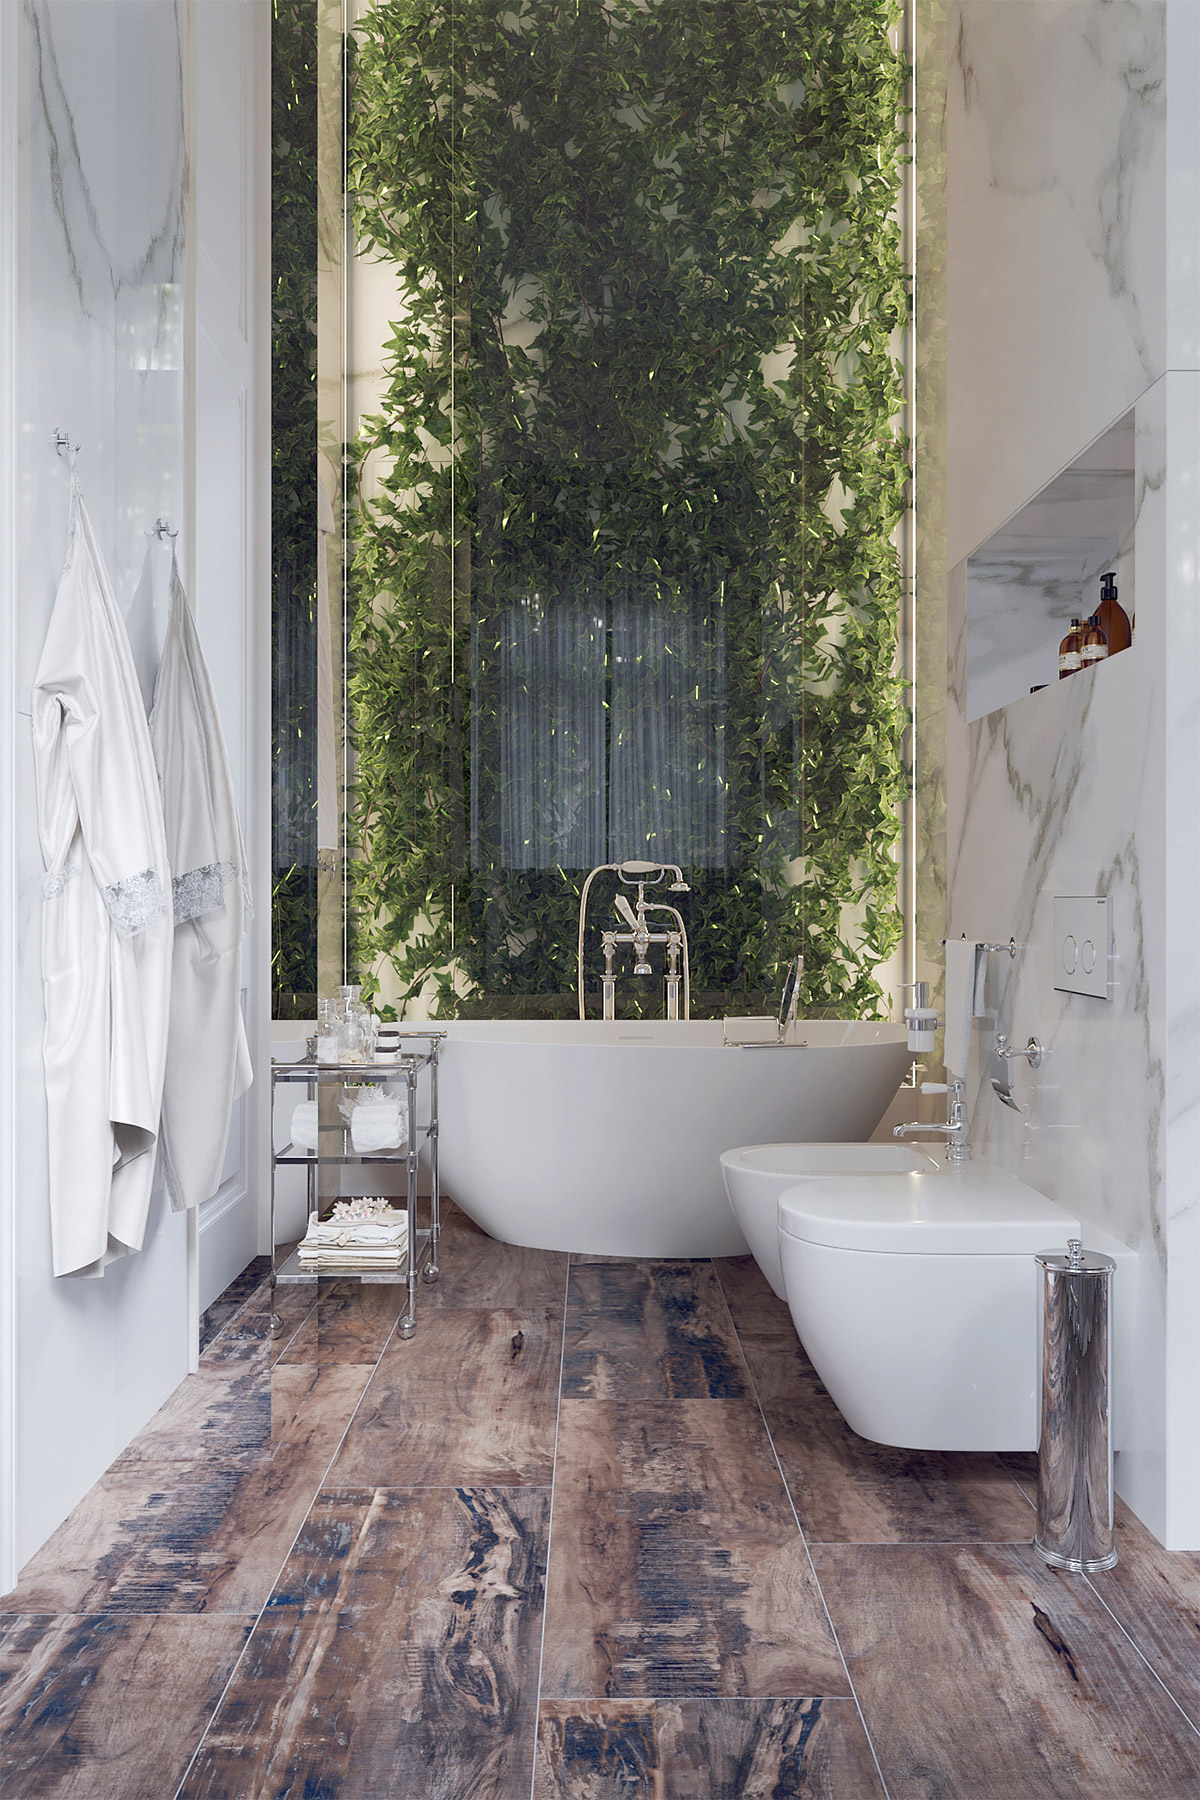 25 Small But Luxury Bathroom Design Ideas - BEST HOME DESIGN IDEAS